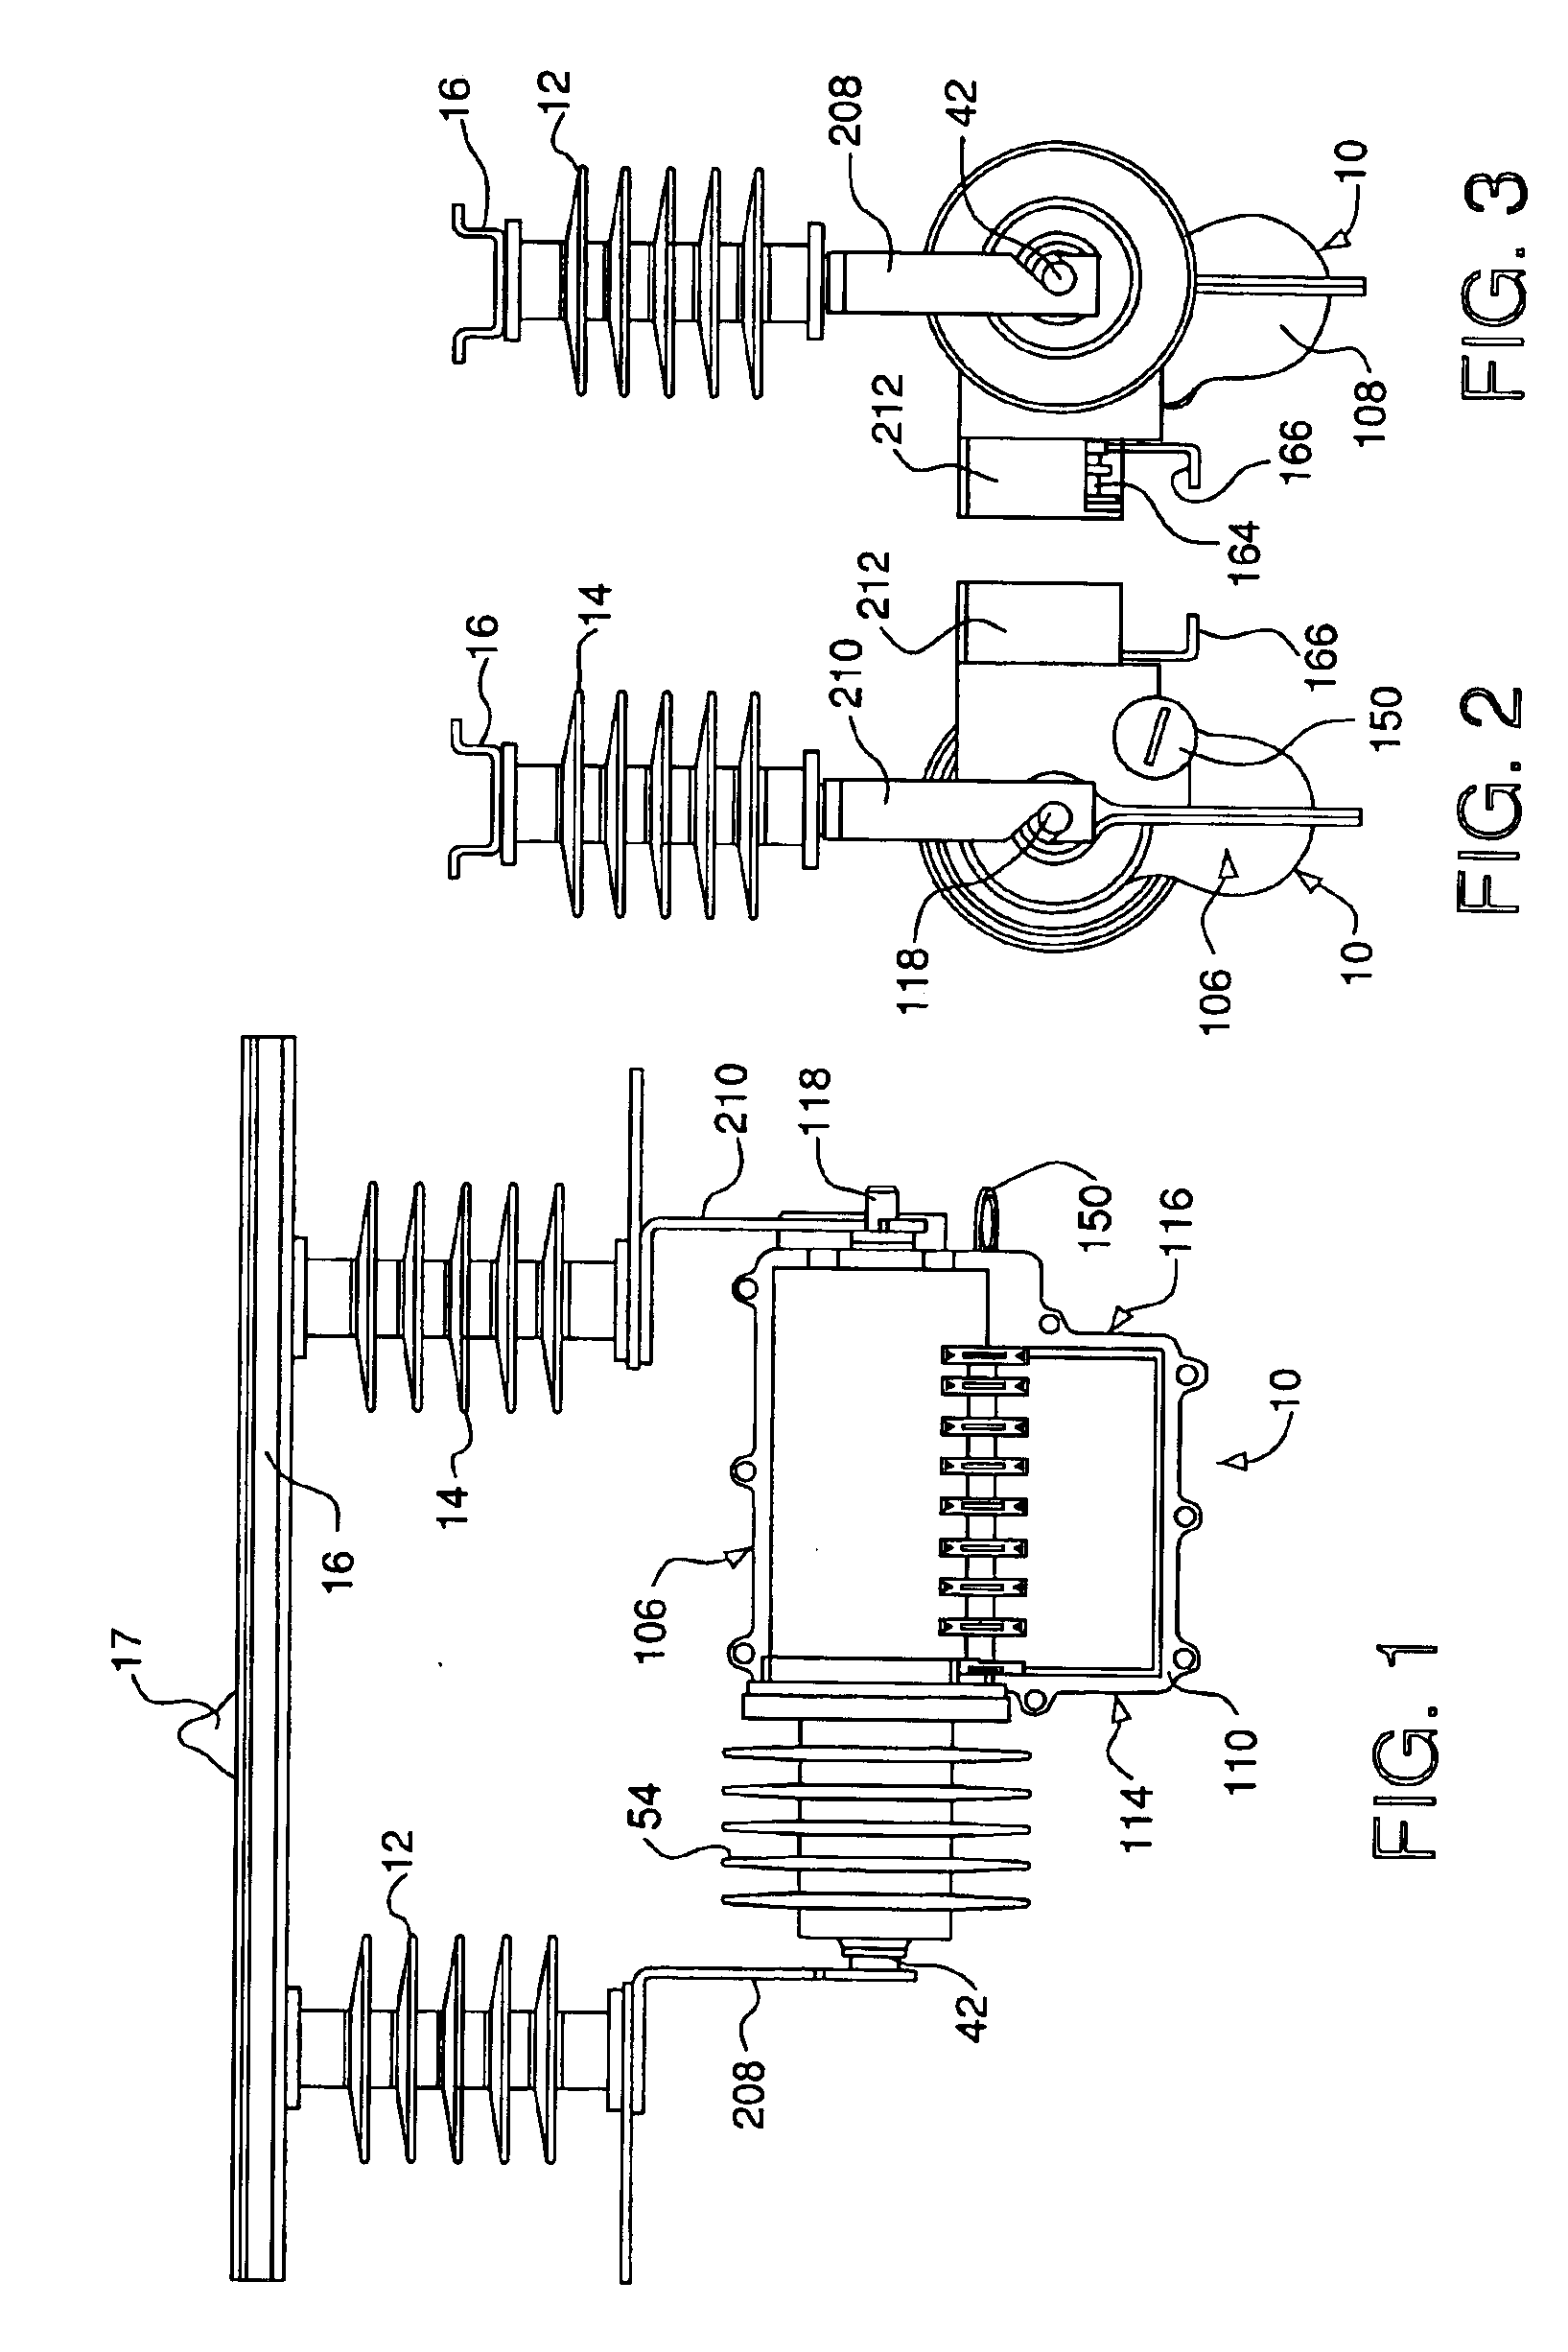 Electrical circuit interrupting device